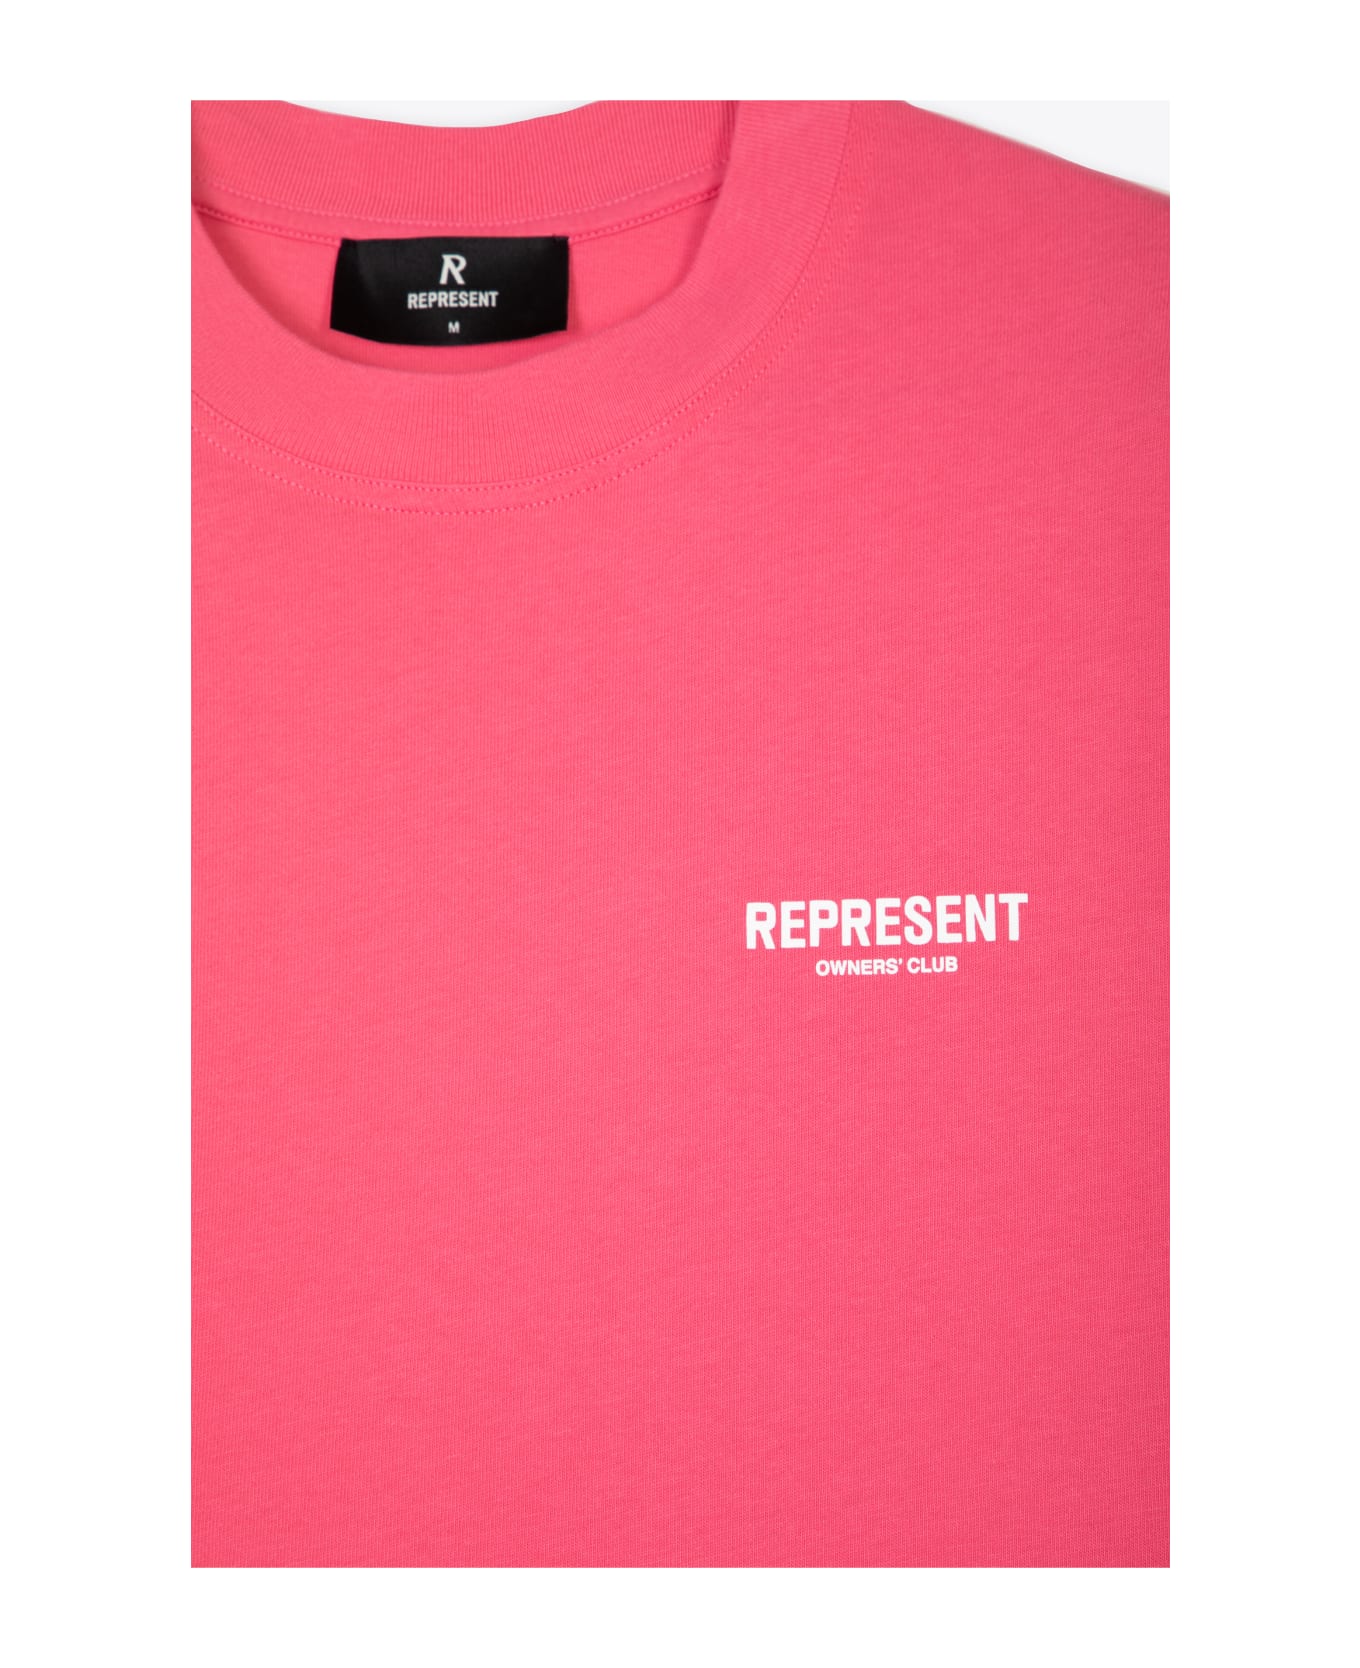 REPRESENT Owners Club T-shirt Bubblegum pink t-shirt with logo - Owners Club T-shirt - Rosa